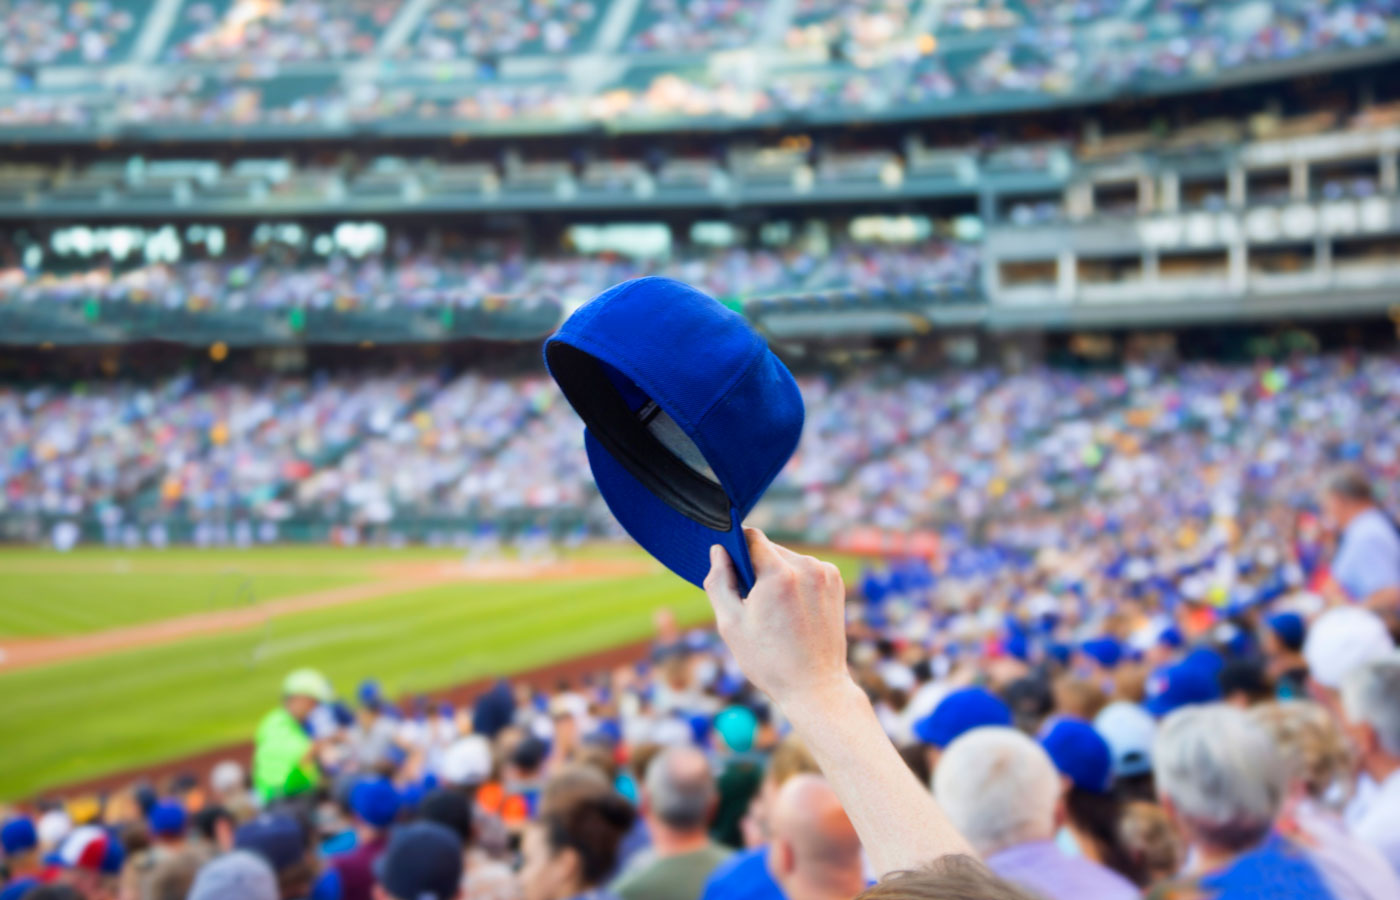 fan holding cap in a baseball game